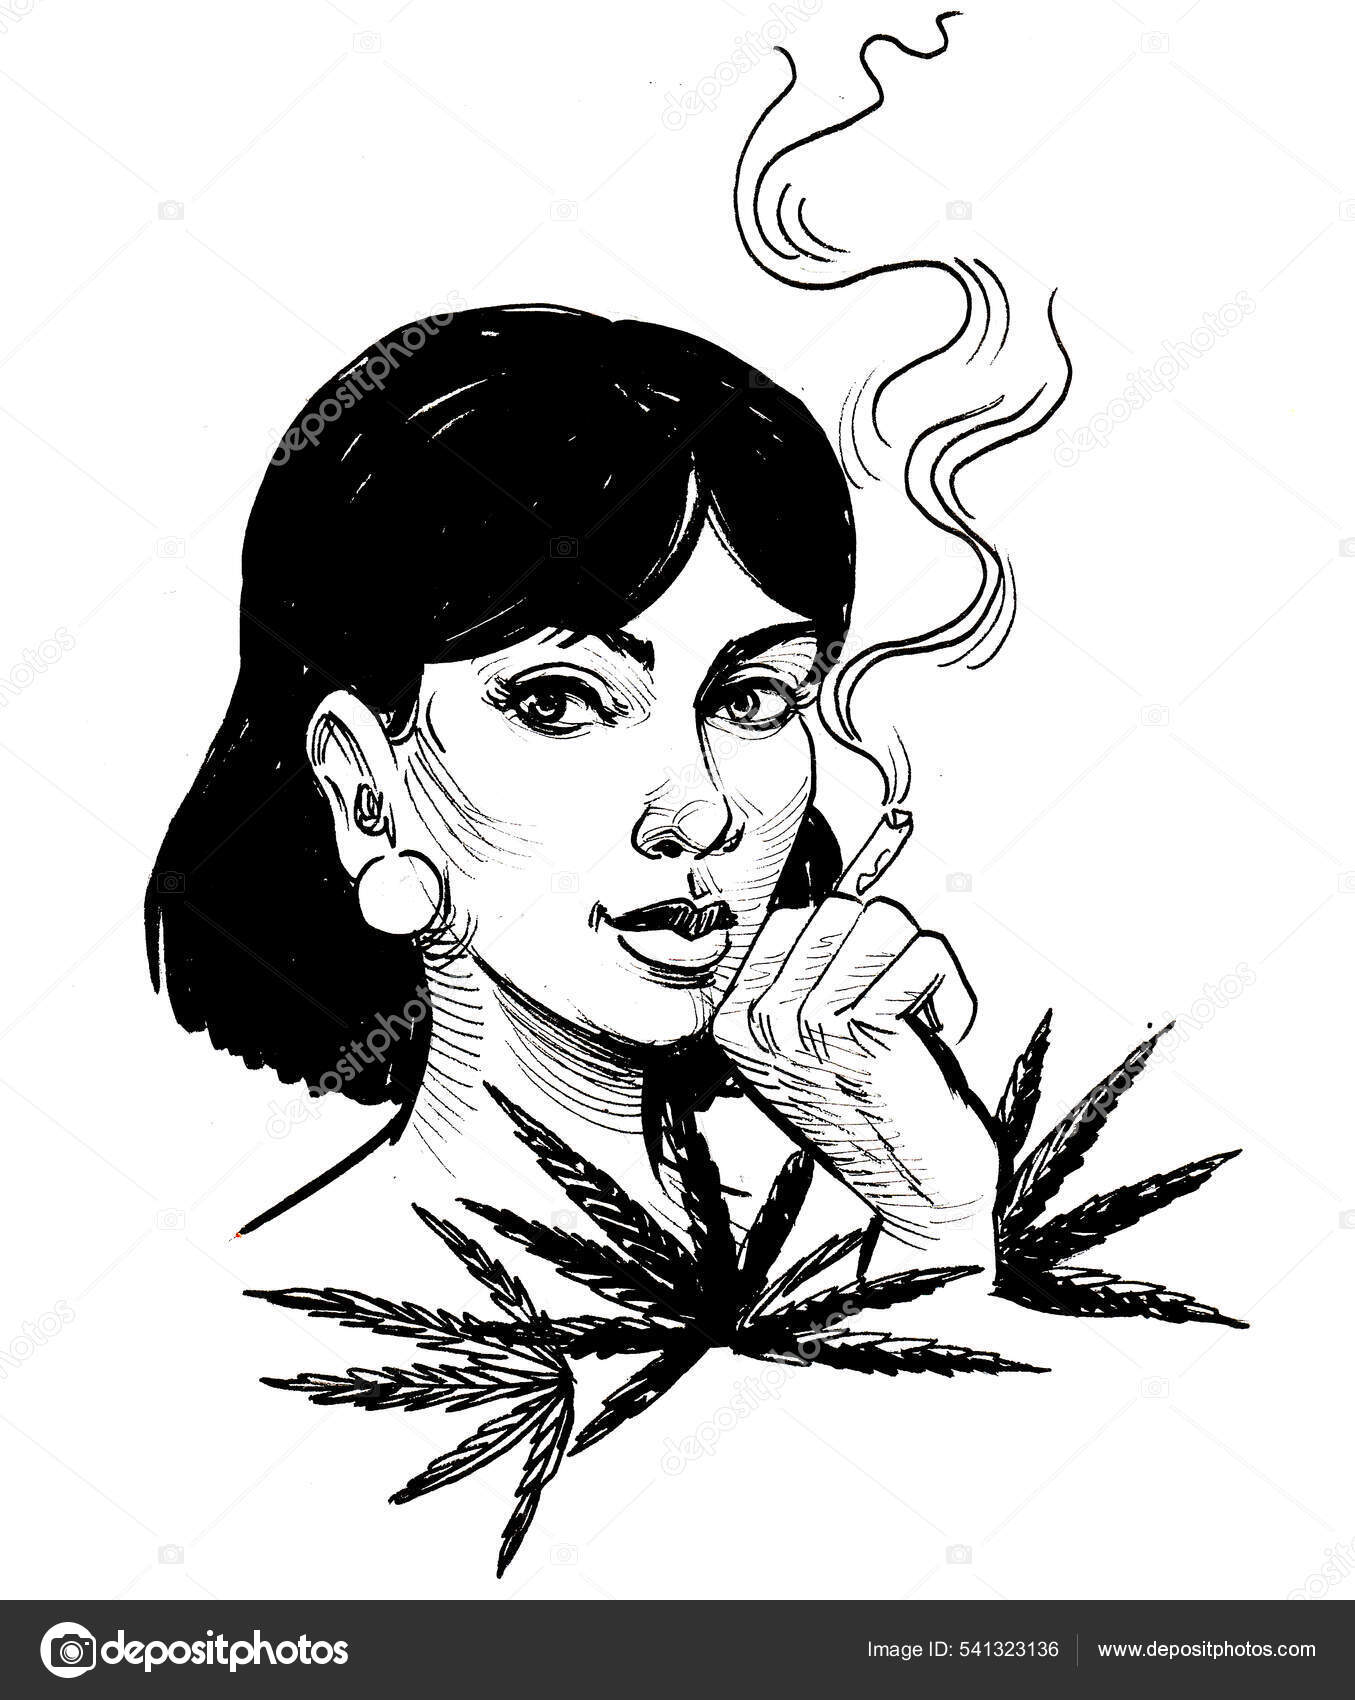 la femme qui fume - dessin original à l'encre - Nadej'Art - Infusions  créatives